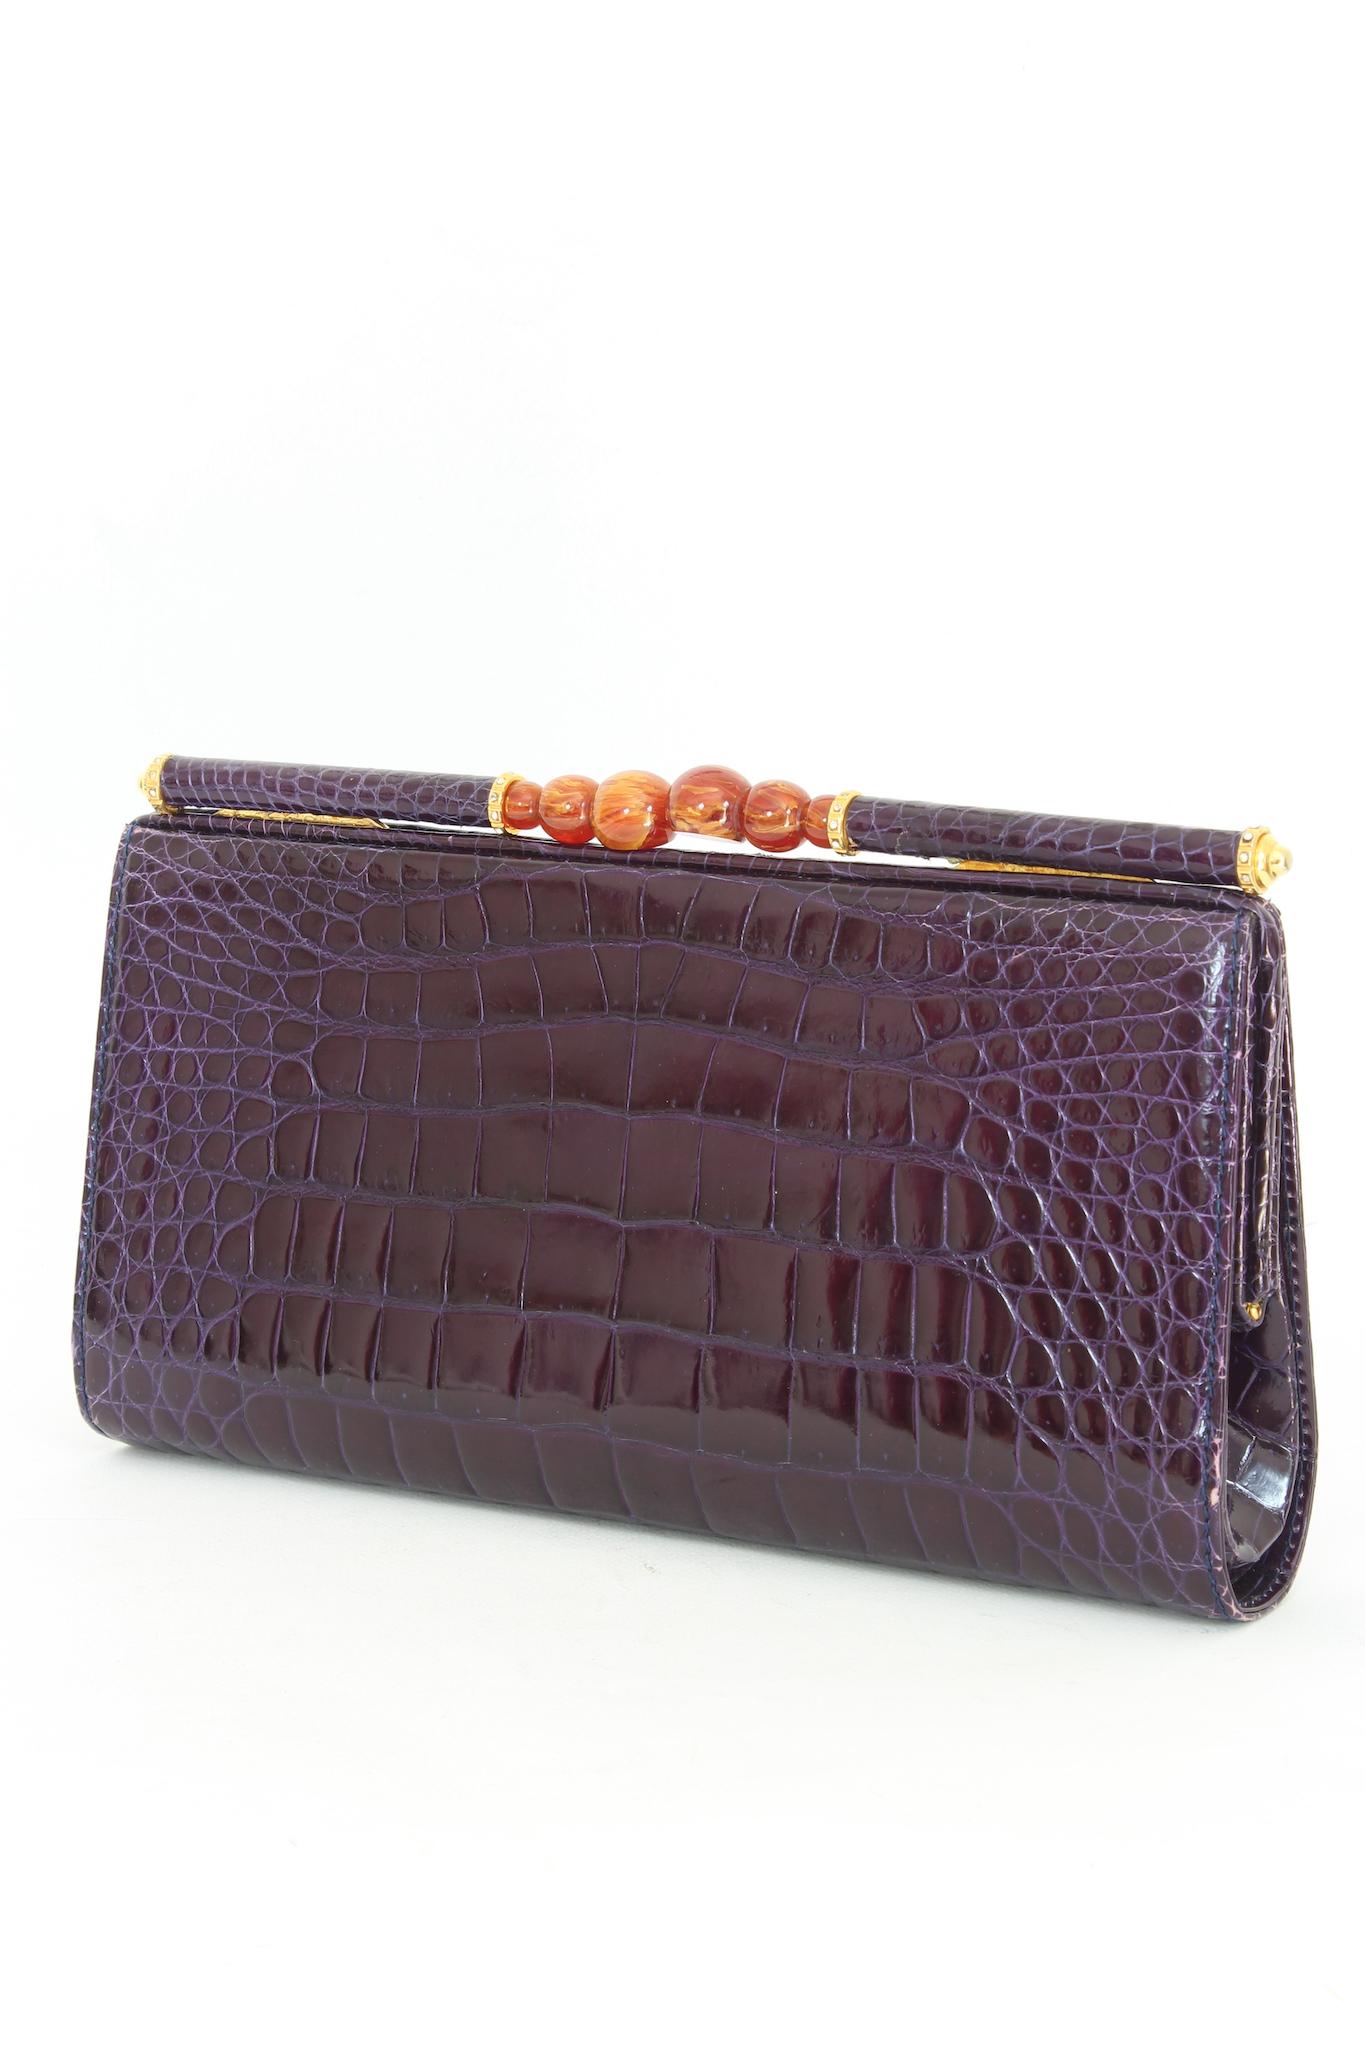 Gucci Violet Leather Crocodile Vintage Rare Bag 1970s 1